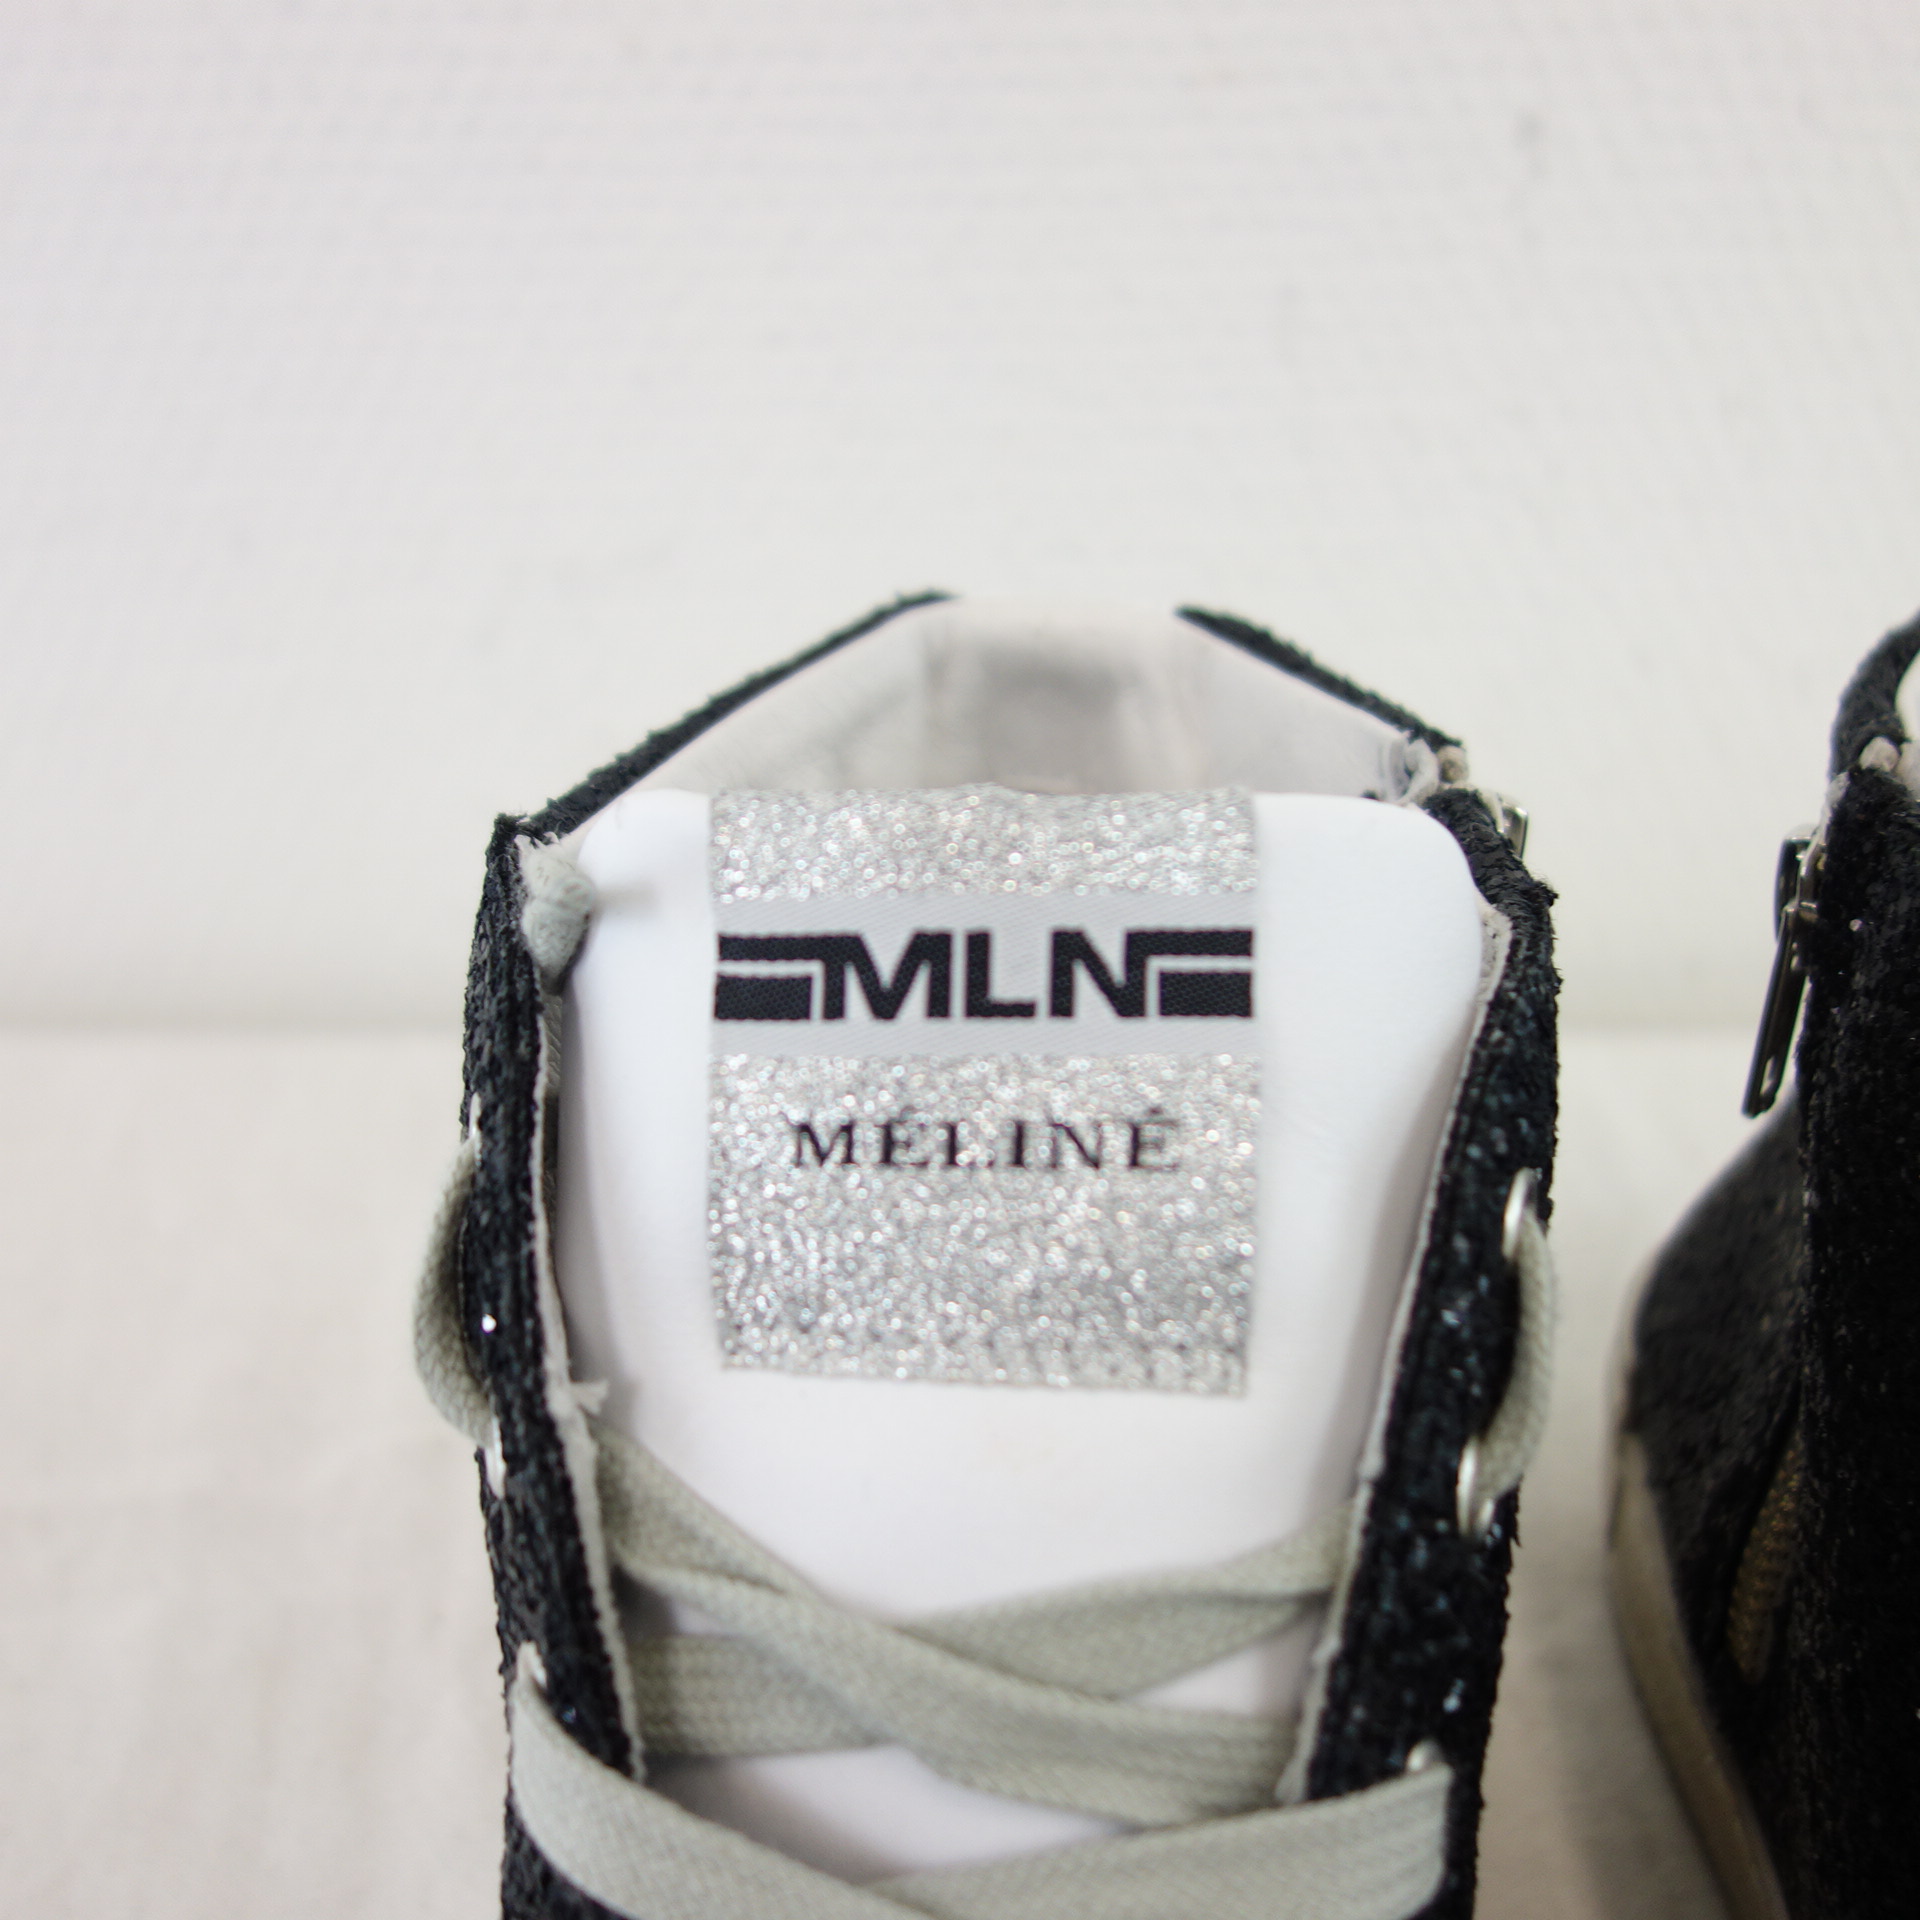 MELINE MLN Damen Sport Schuhe High Top Sneaker Glitzer Schwarz Leder Modell NKC 1369